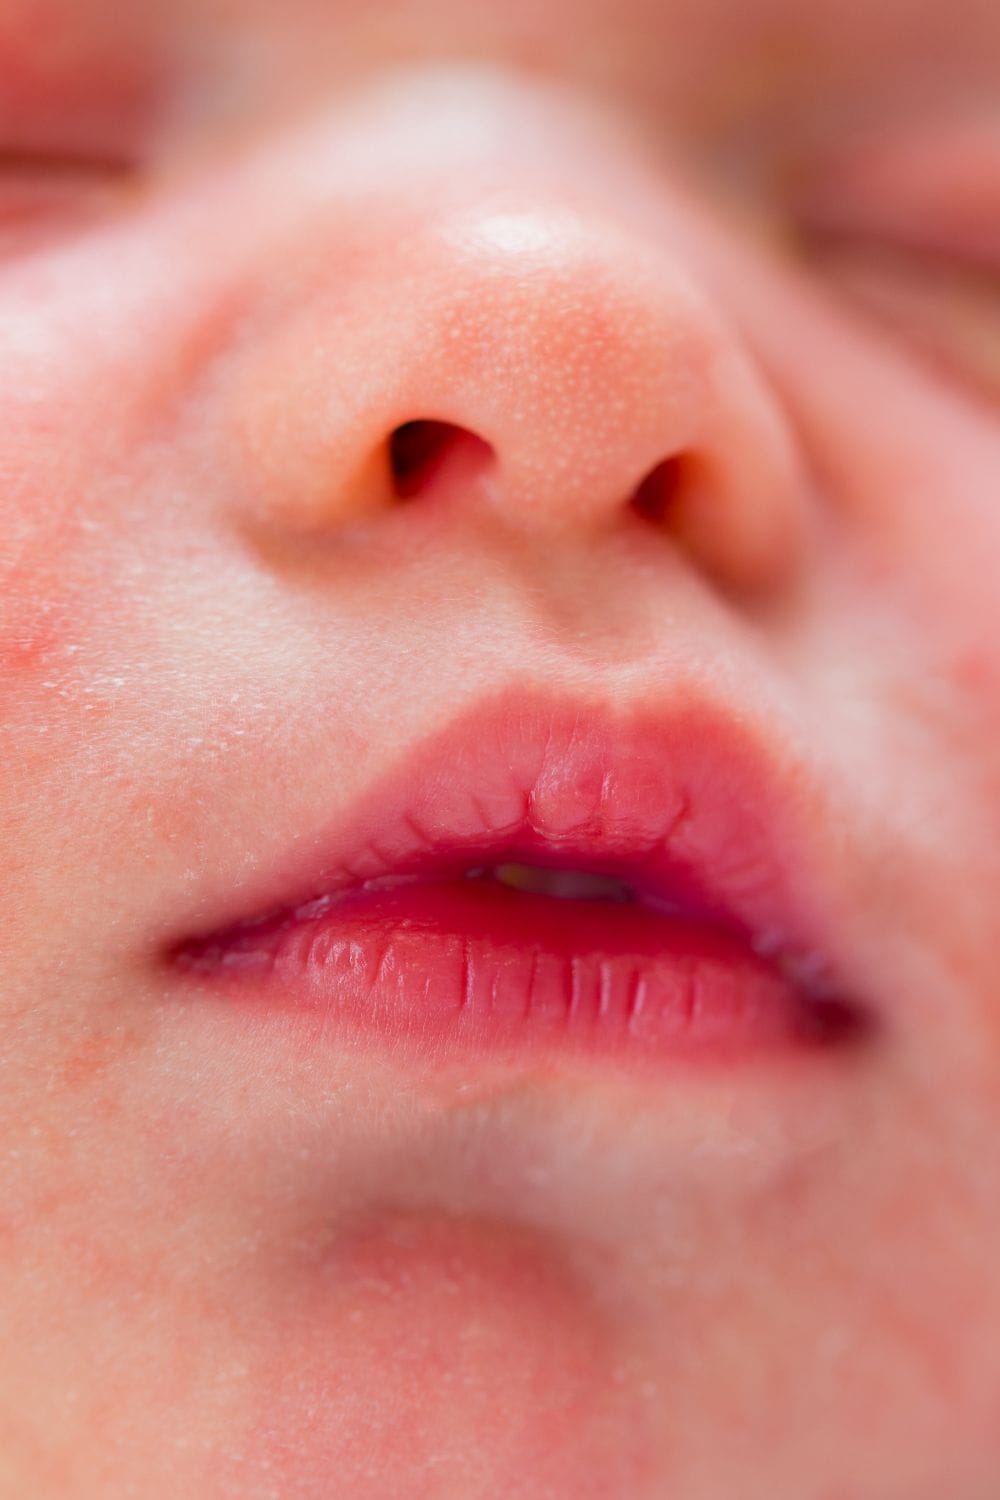 rash on baby's nose